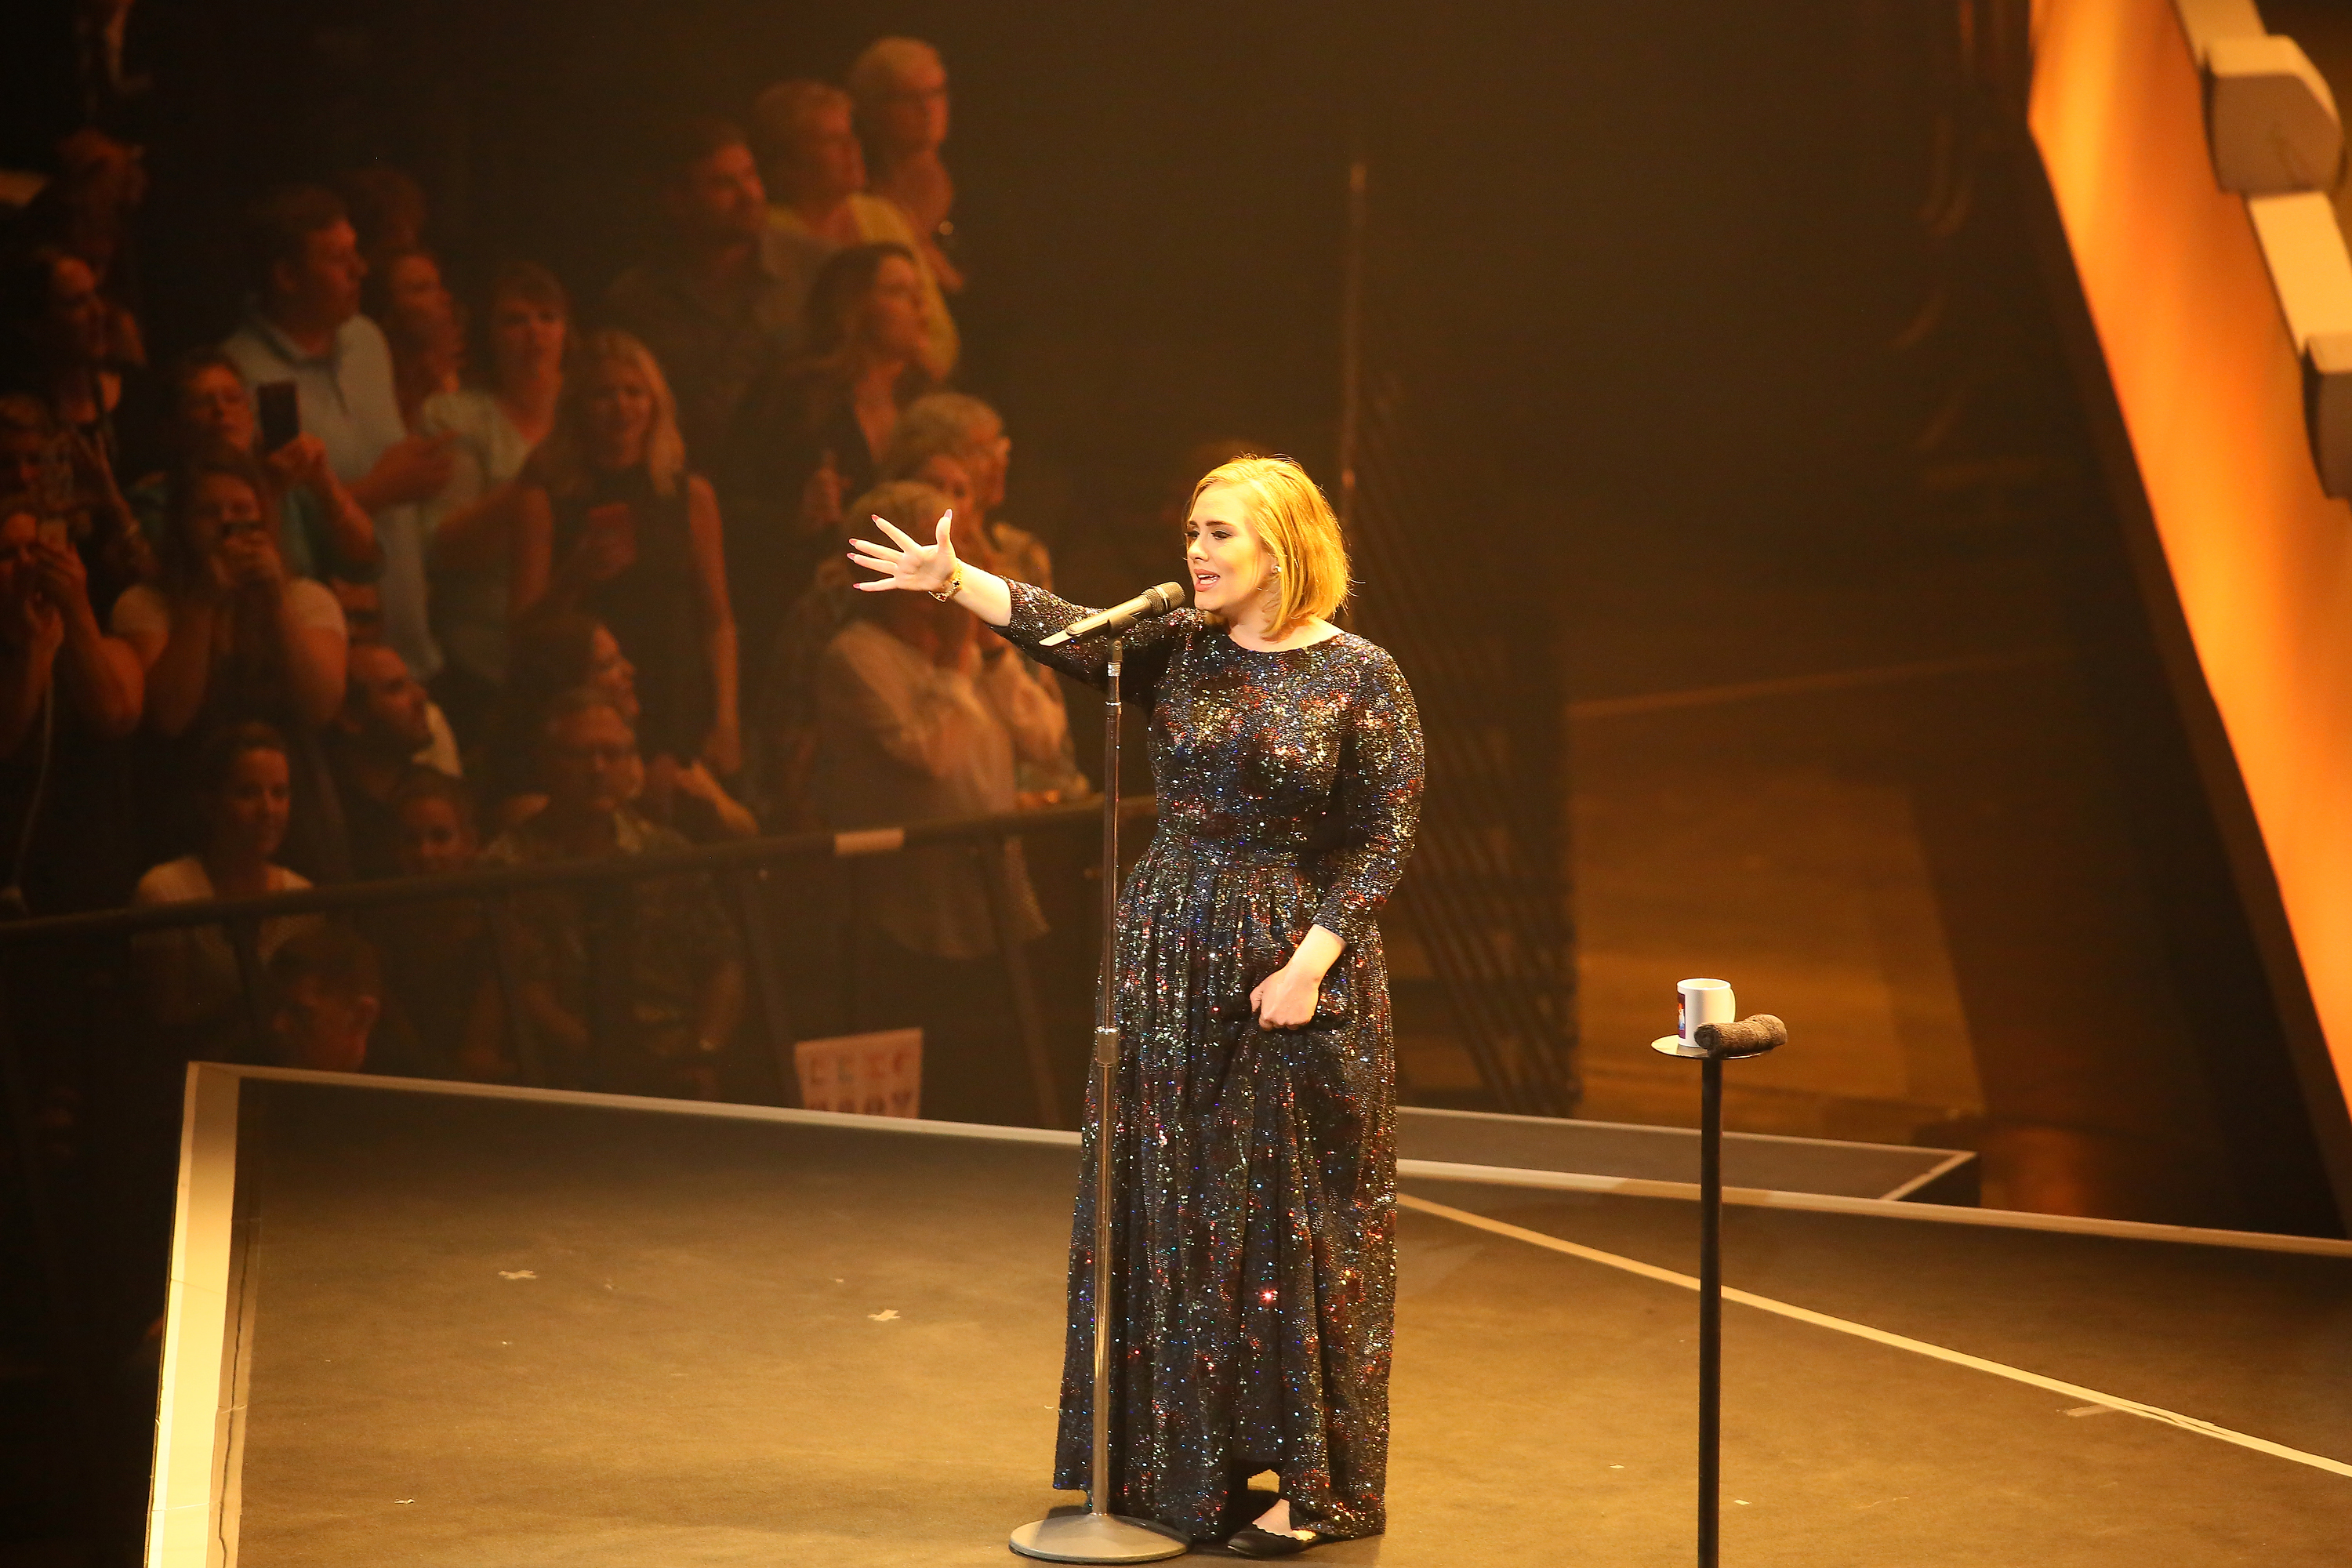 Adele On Stage